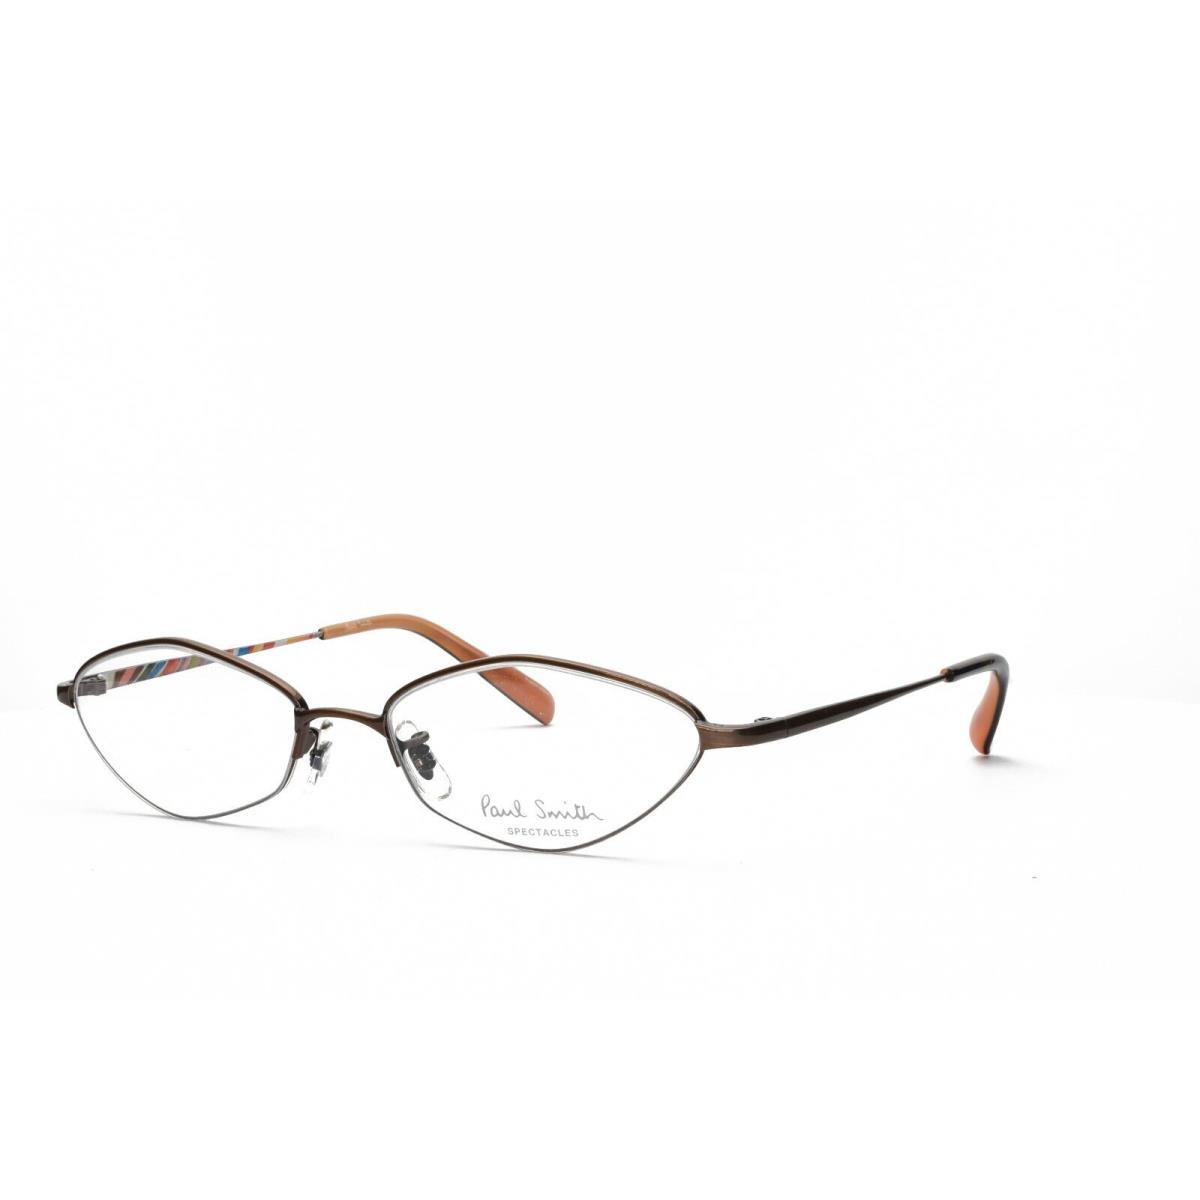 Paul Smith PS 1003 MC Eyeglasses Frames Only 51-17-138